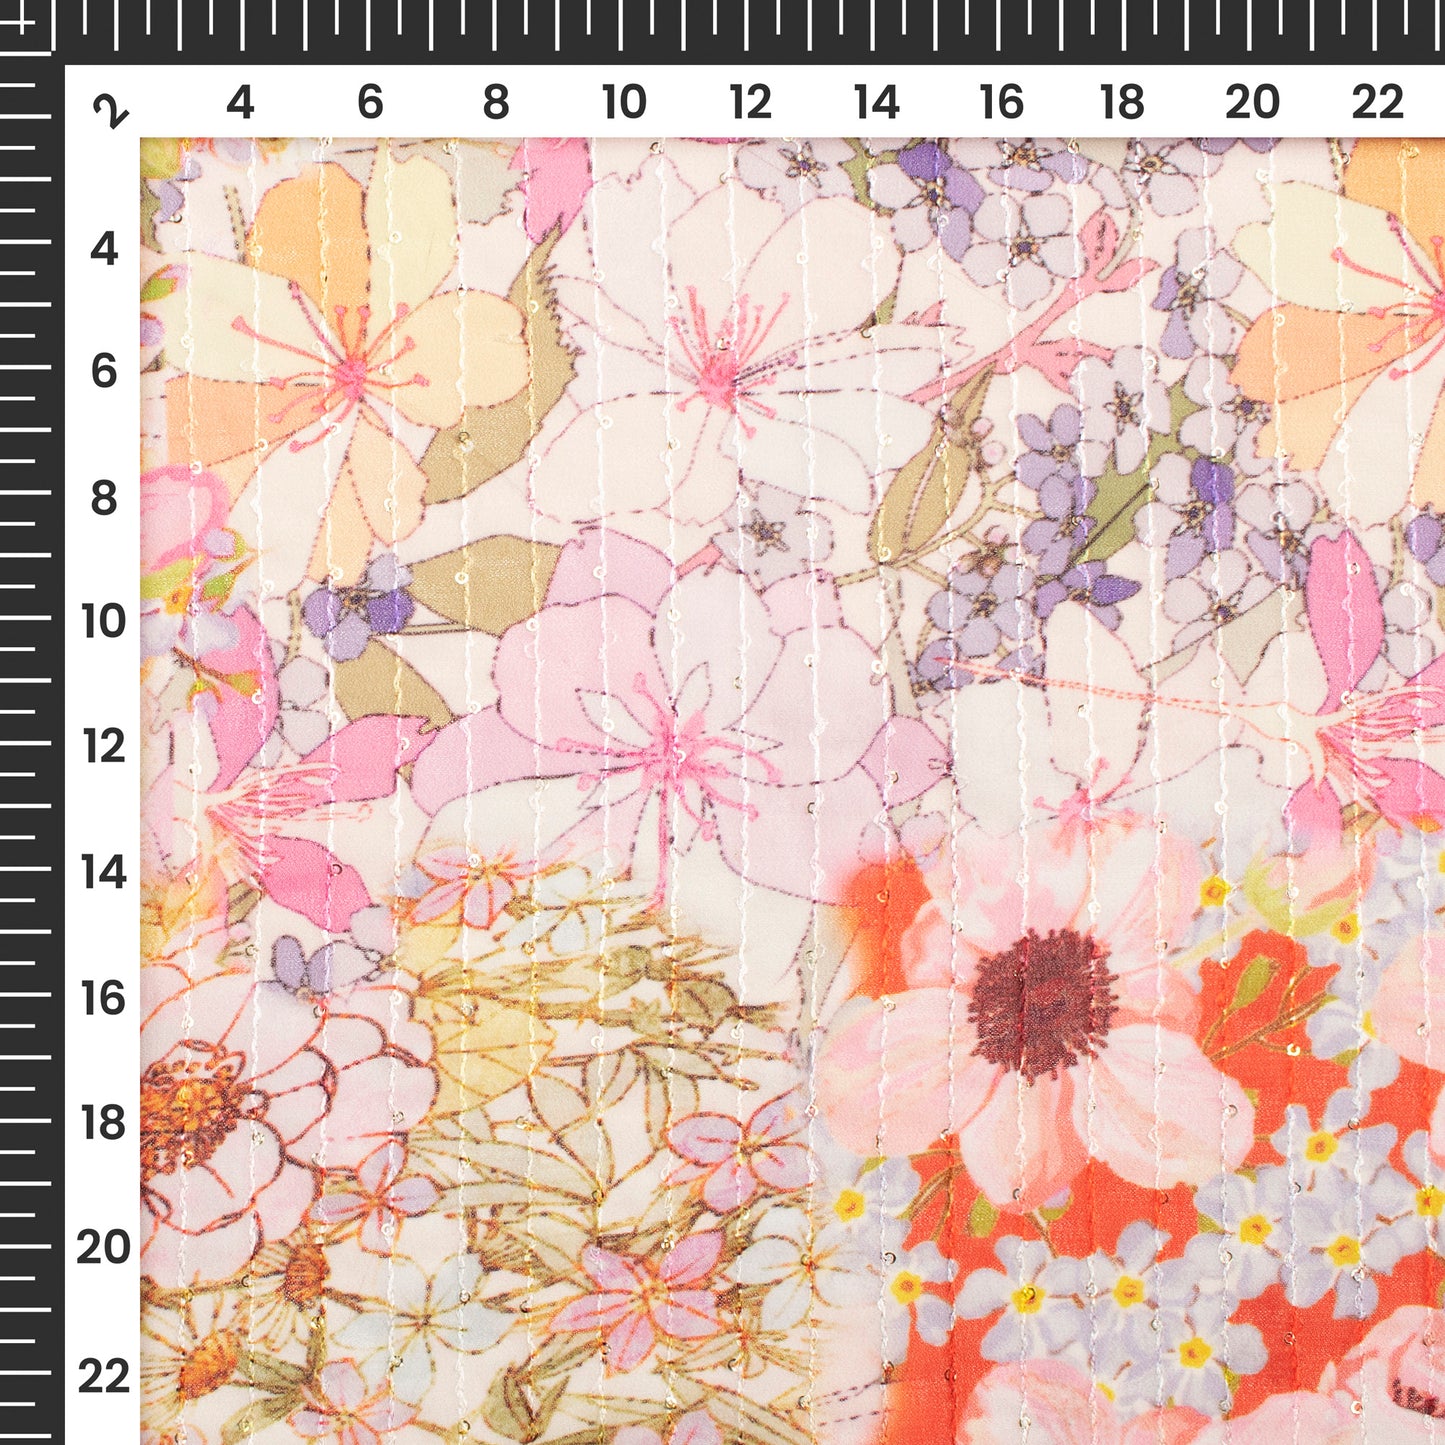 Botanical Floral Digital Print Sequins Premium Georgette Fabric